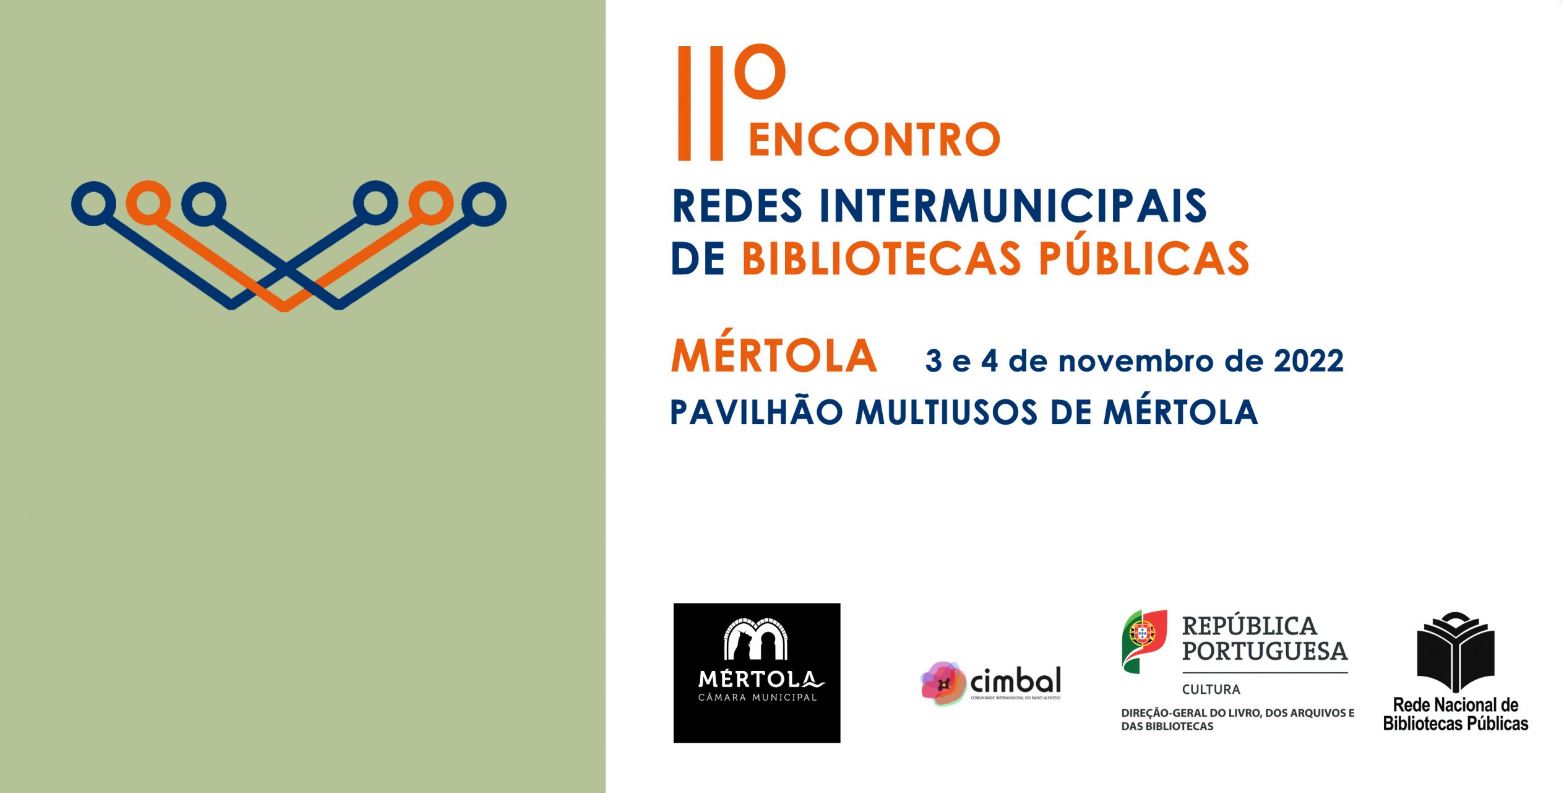 II Encontro das Redes Intermunicipais de Bibliotecas Públicas| Mértola: 3 e 4 de novembro